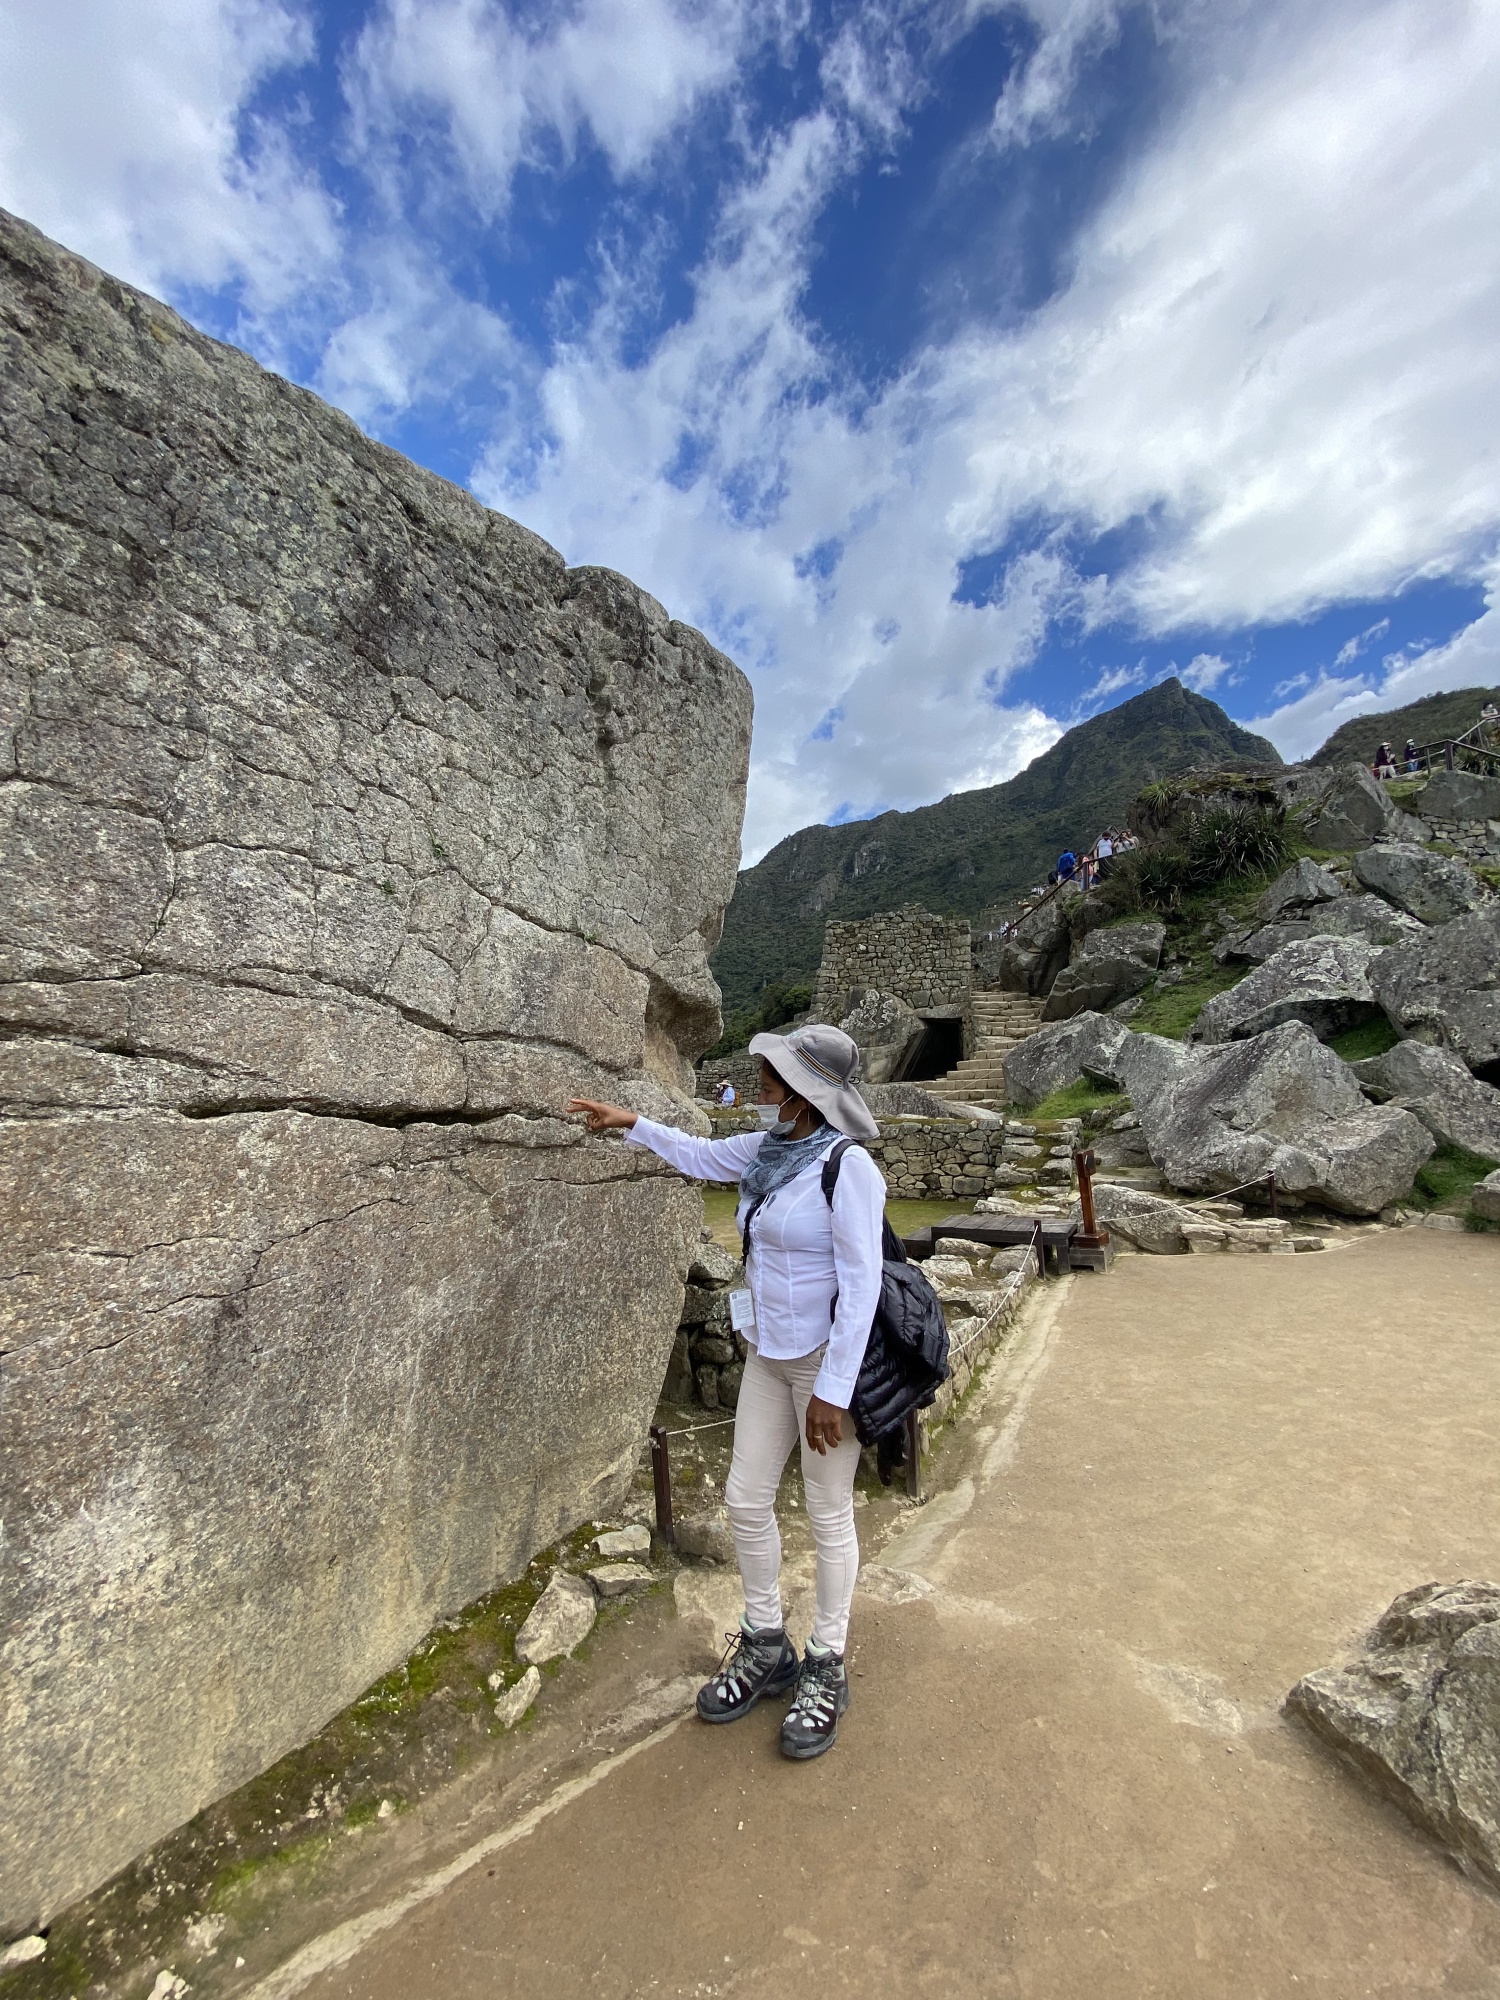 The silent stones of Machu Picchu